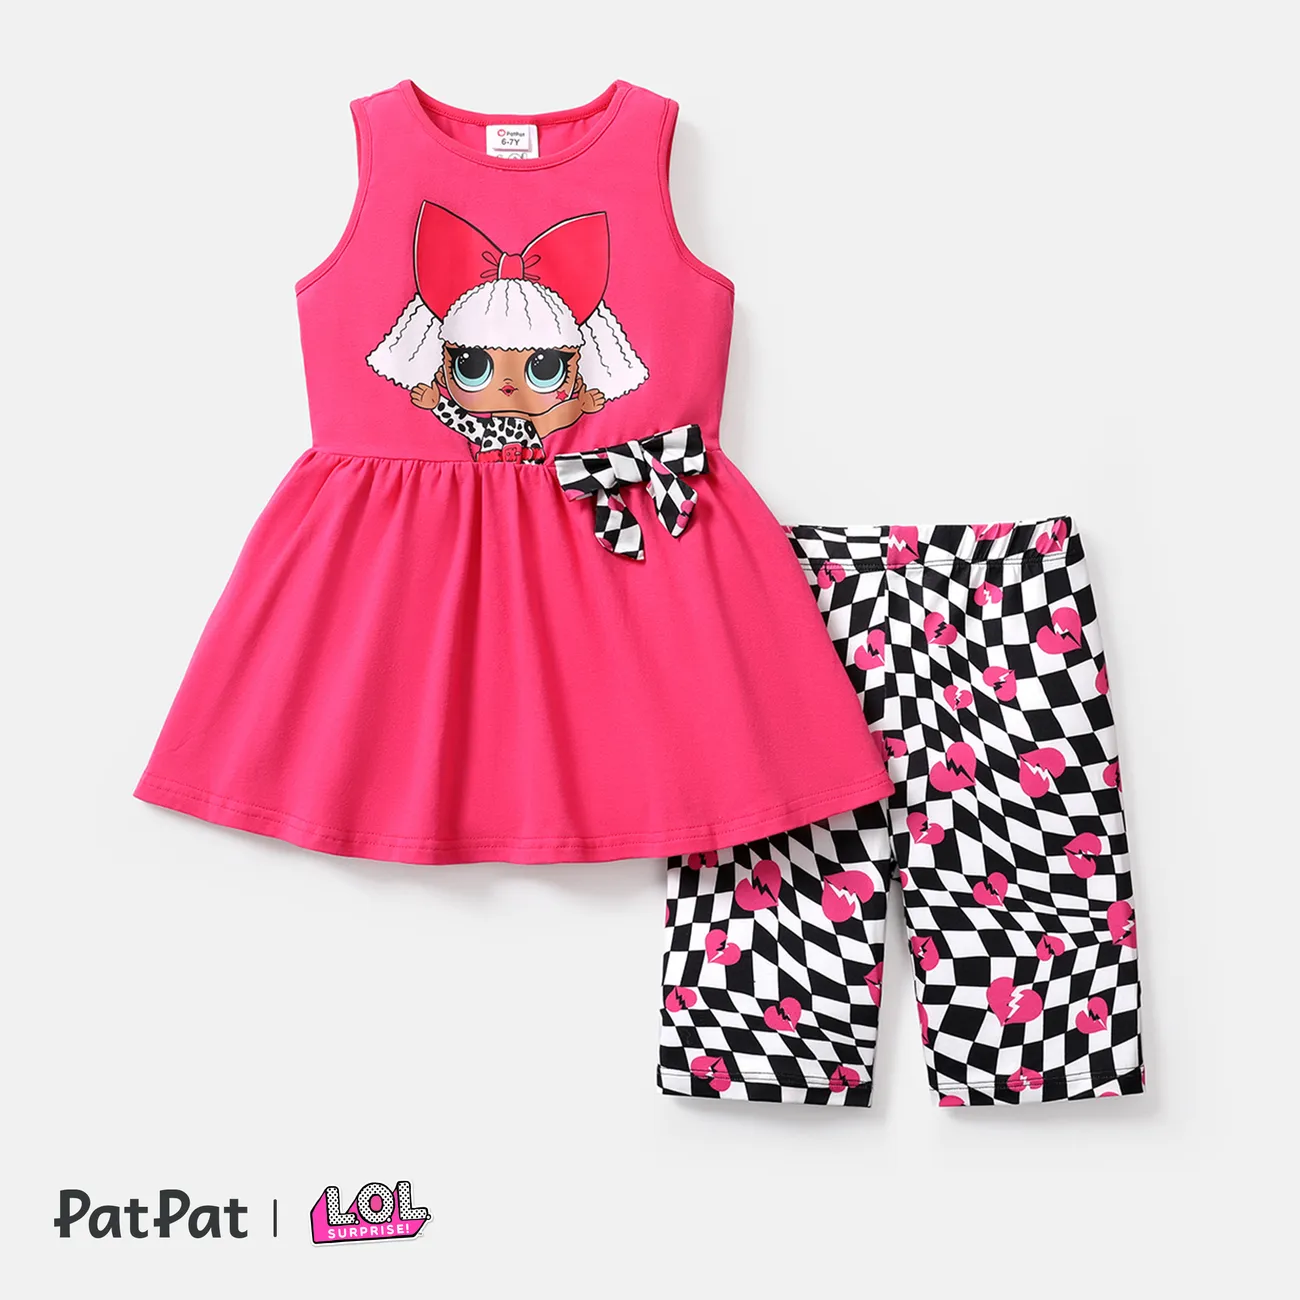 L.O.L. SURPRISE! 2pcs Toddler/Kid Girl Bowknot Design Sleeveless Tee and Shorts Set PINK-1 big image 1